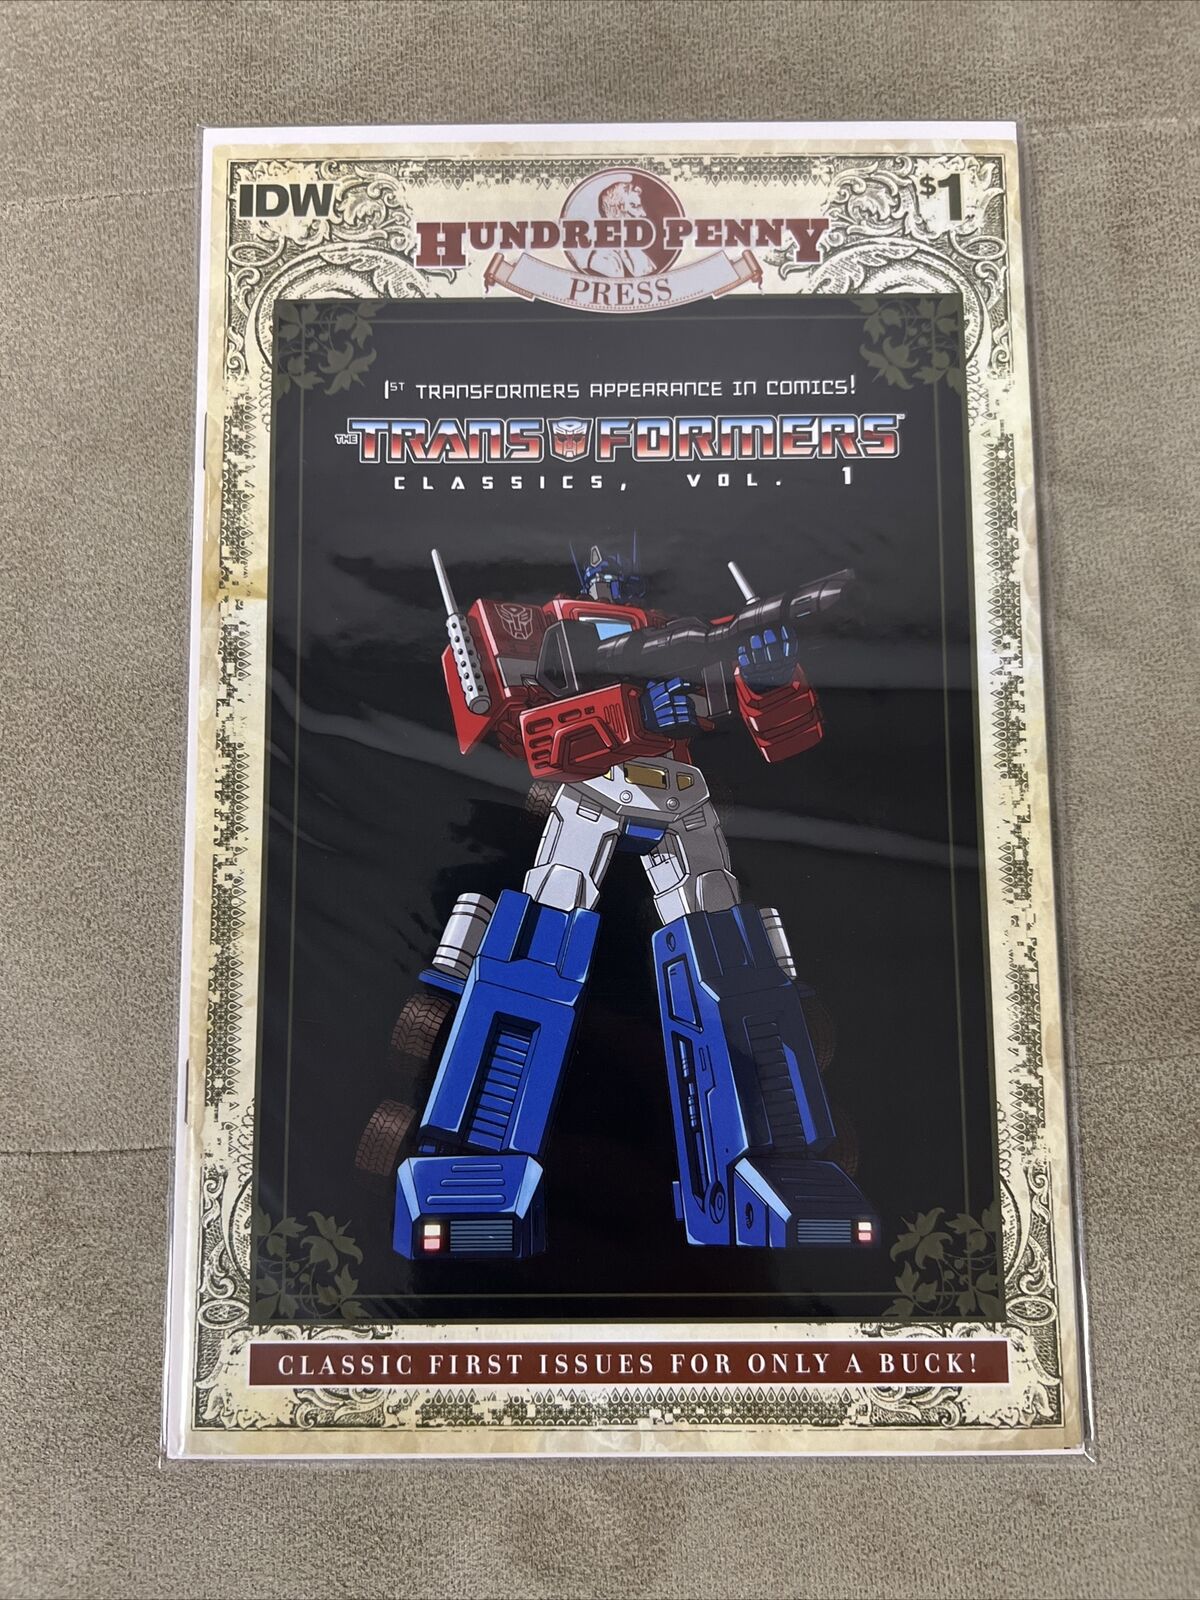 Transformers Classics #1, Hundred Penny Press NM